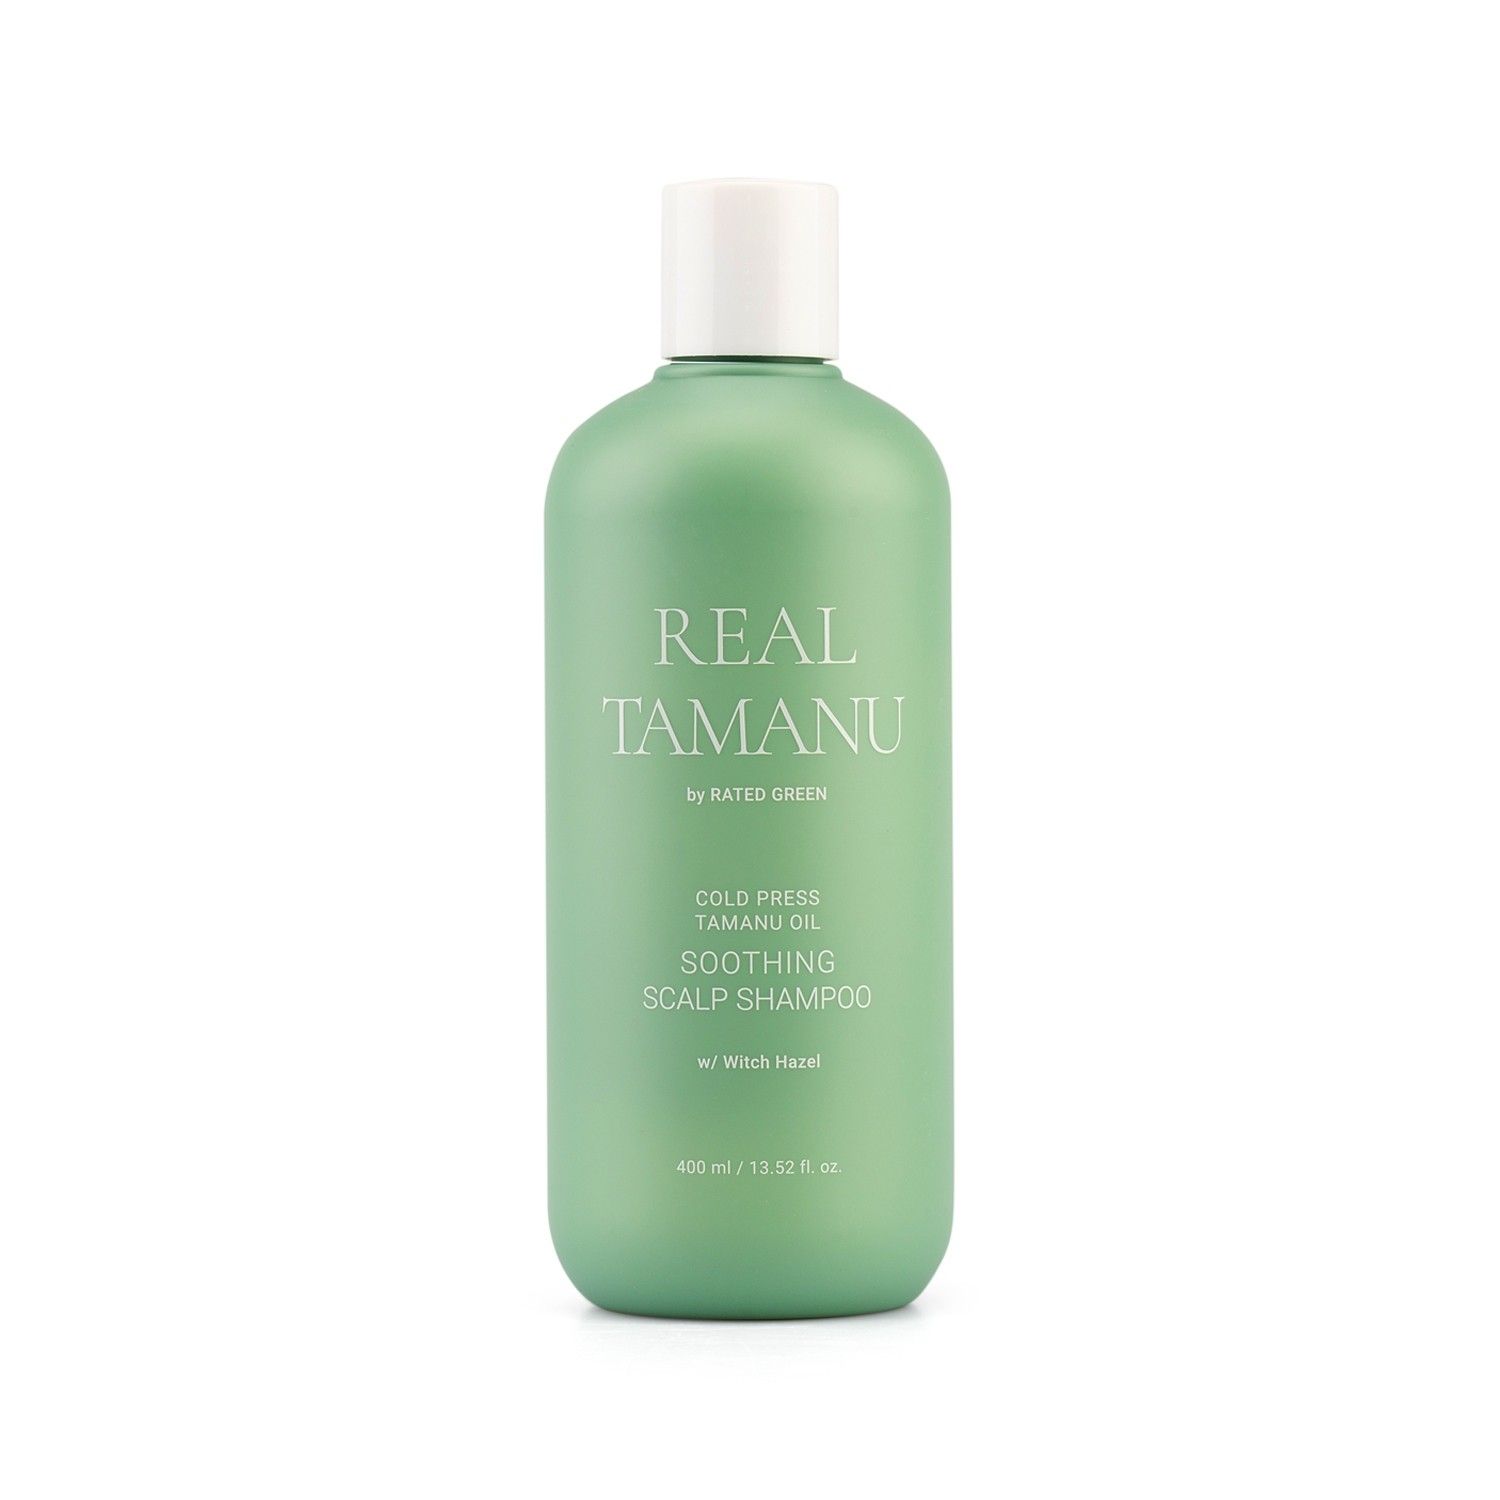 Успокаивающий Шампунь с маслом таману Rated Green Real Tamanu Cold Pressed Tamanu Oil Soothing Scalp Shampoo, 400мл